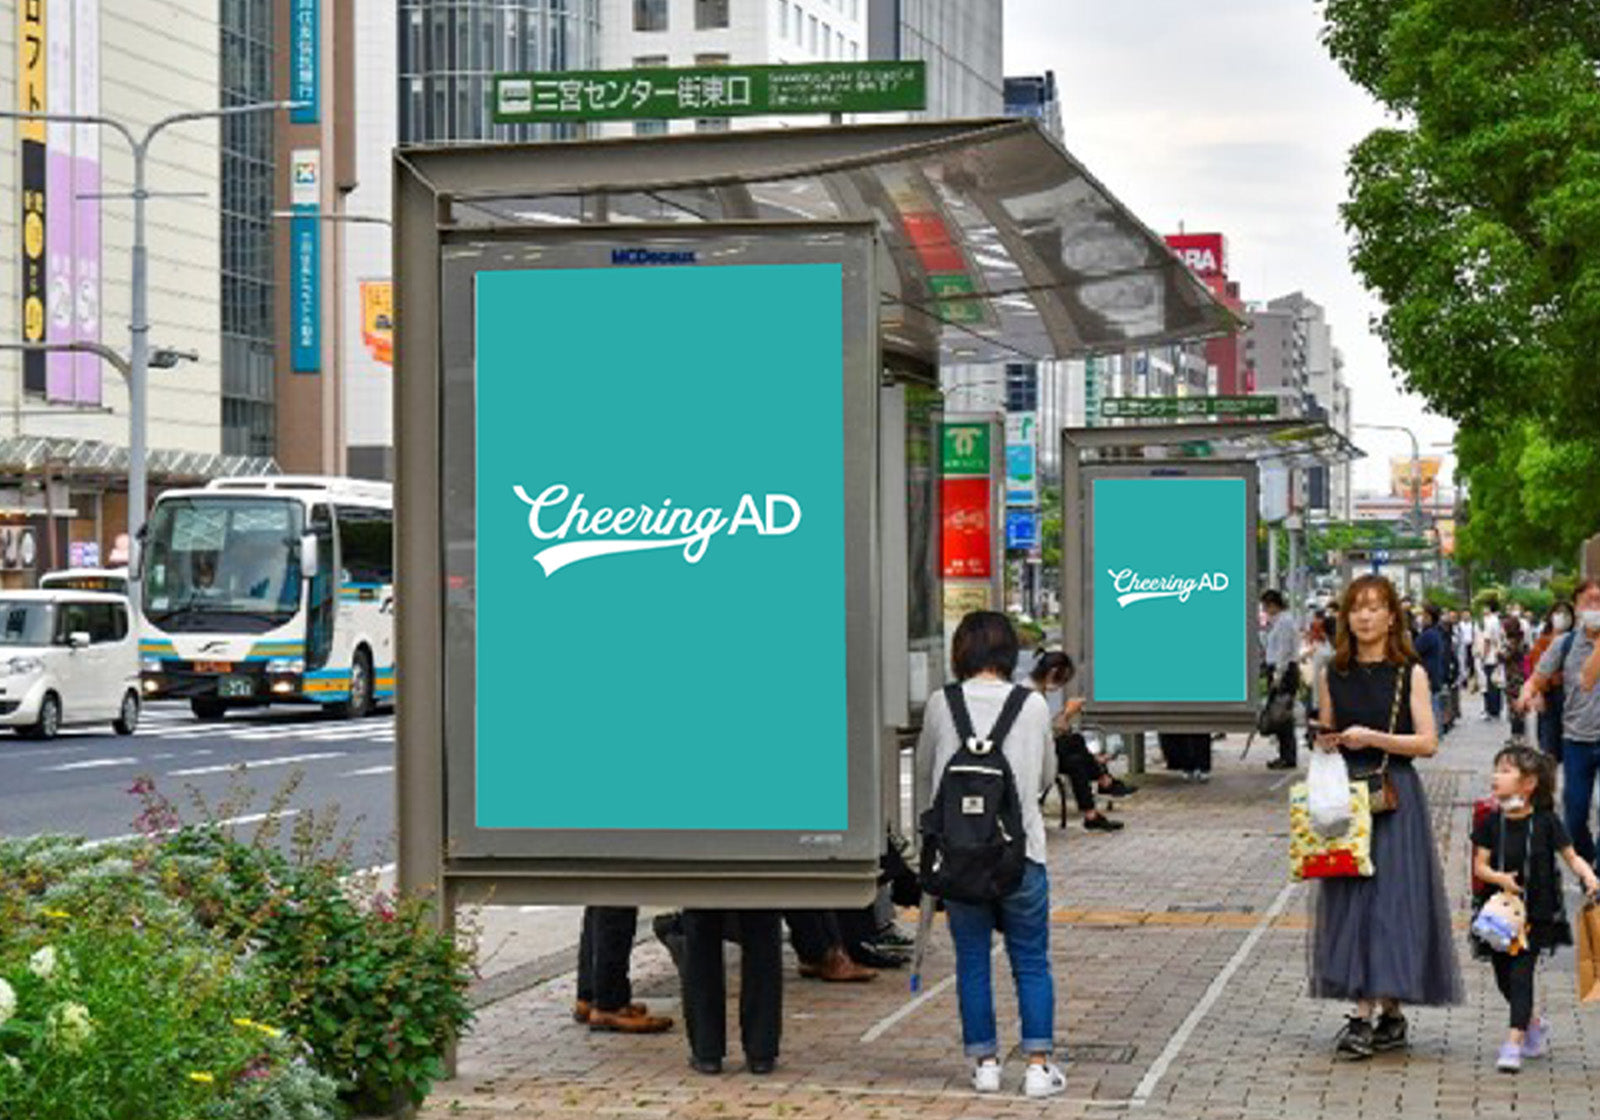 Bus stop advertisement image